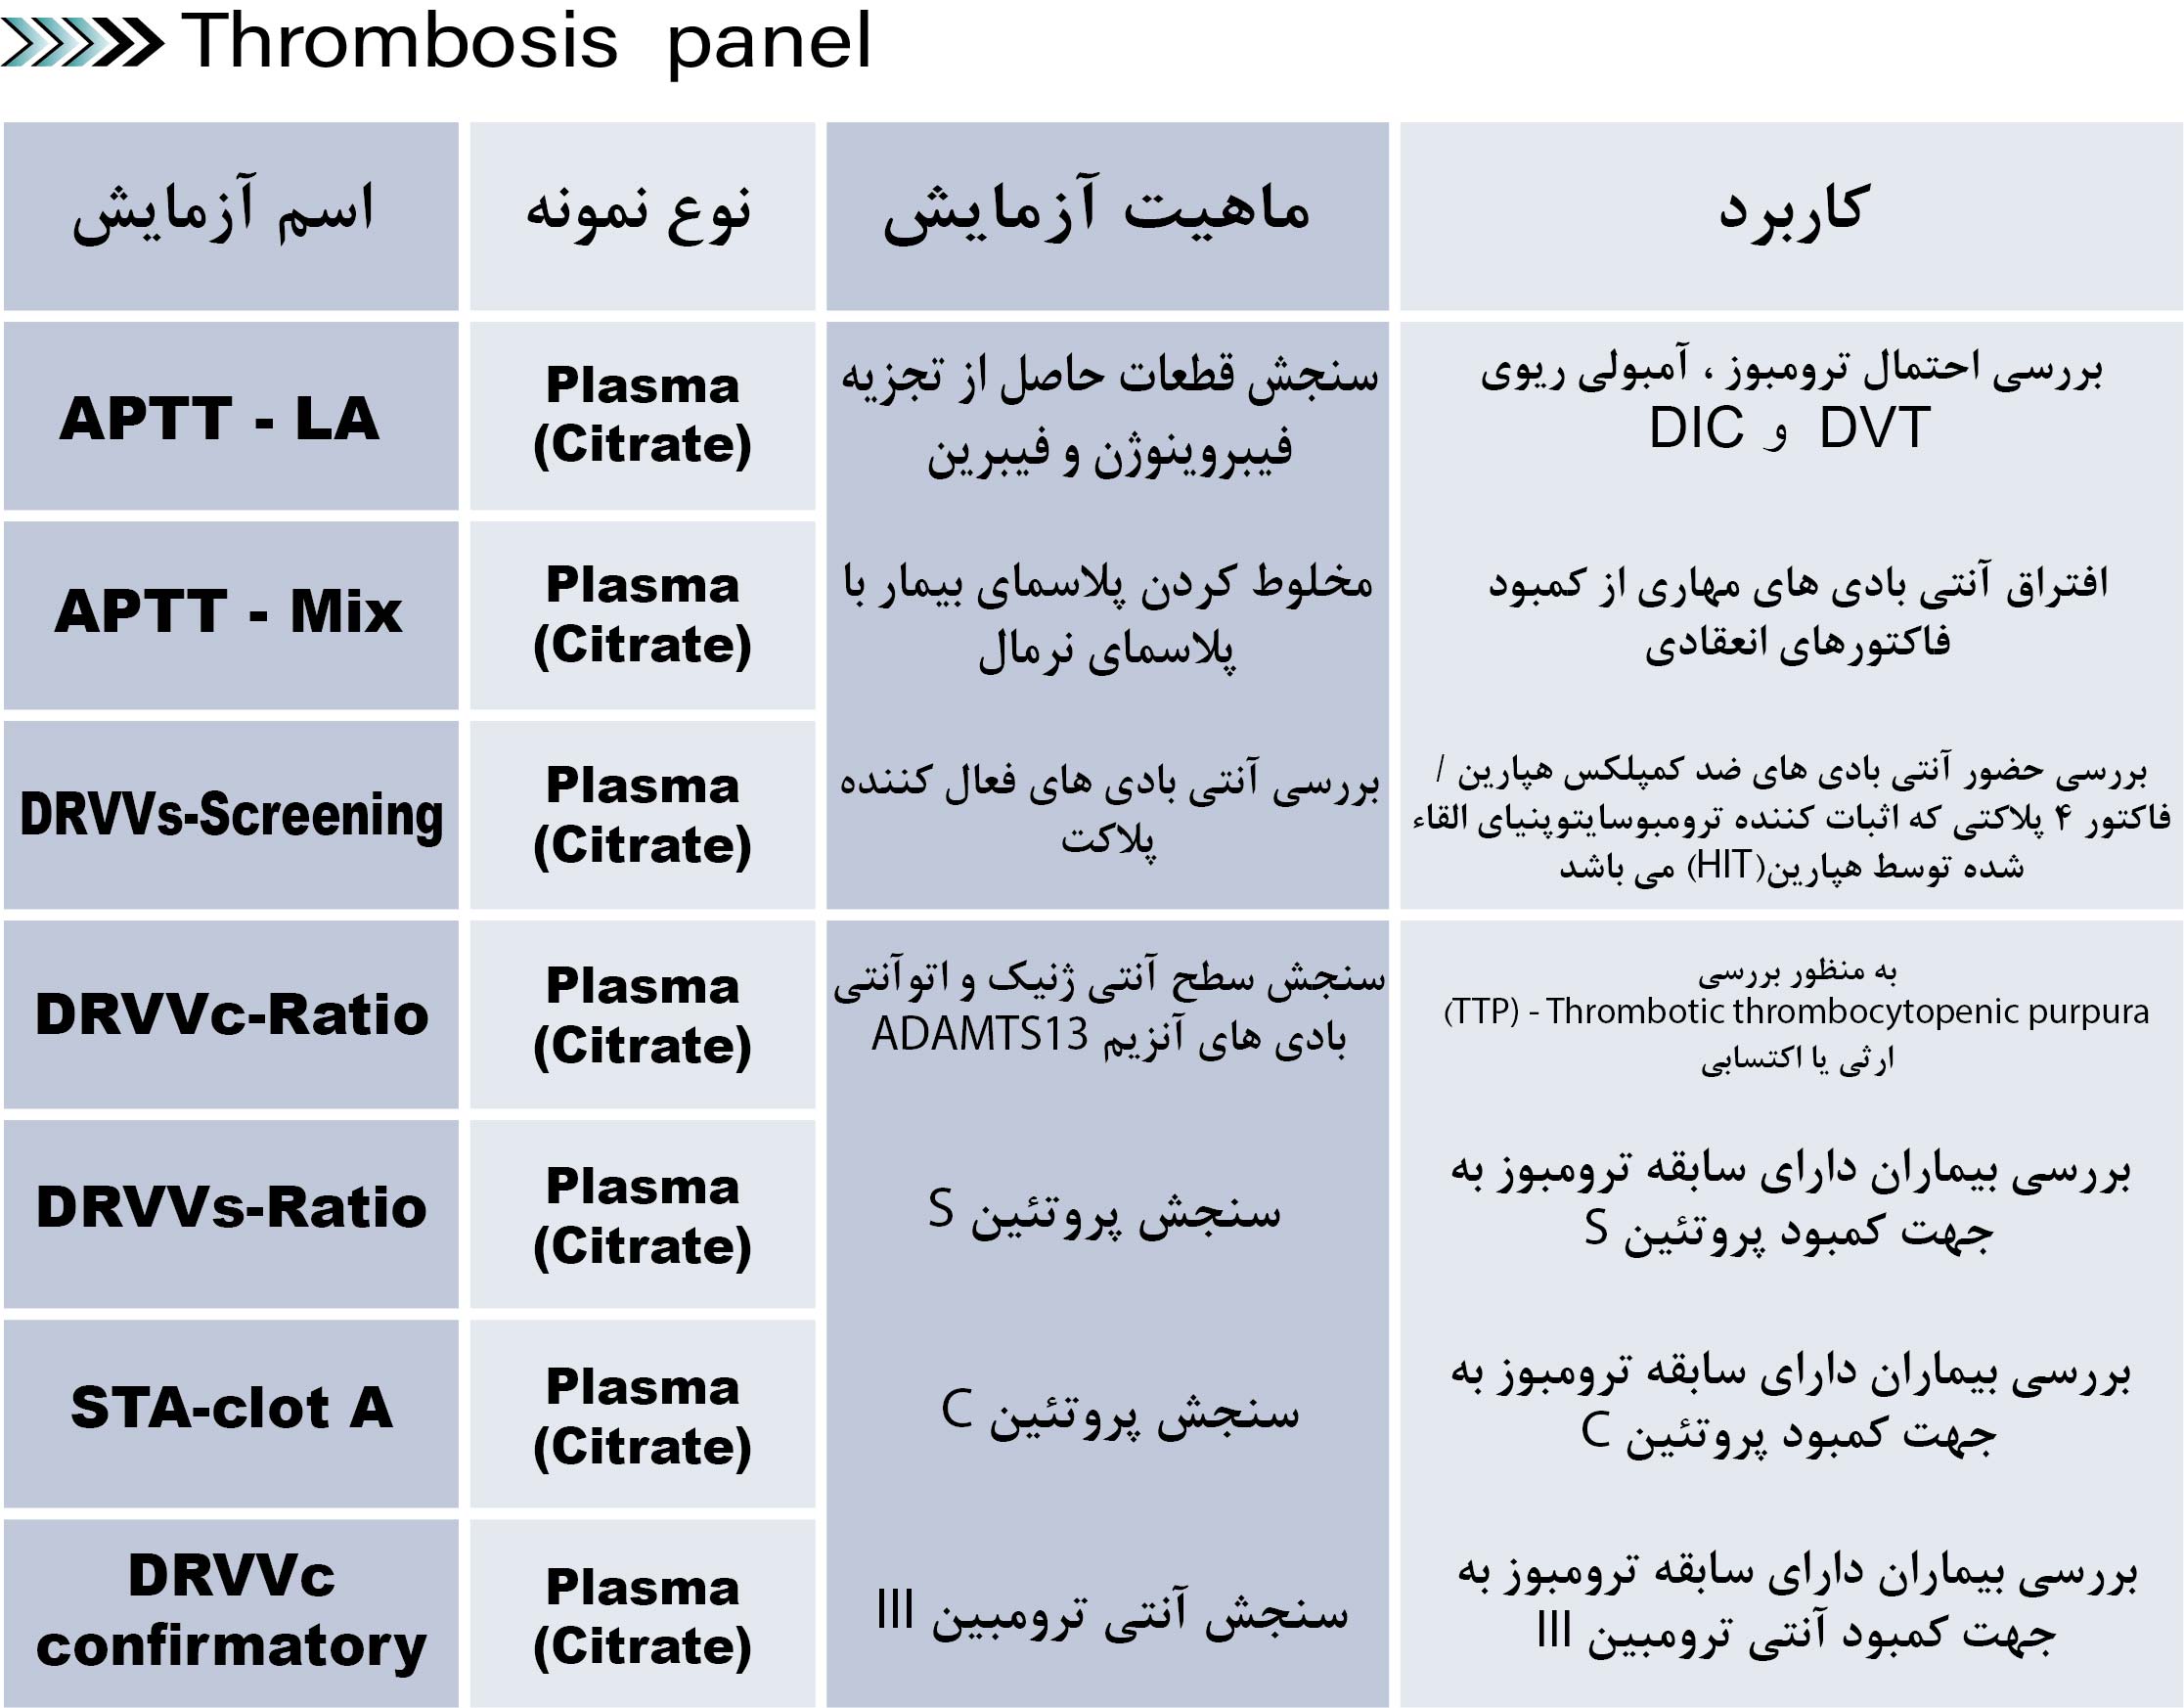 Thrombosis panel